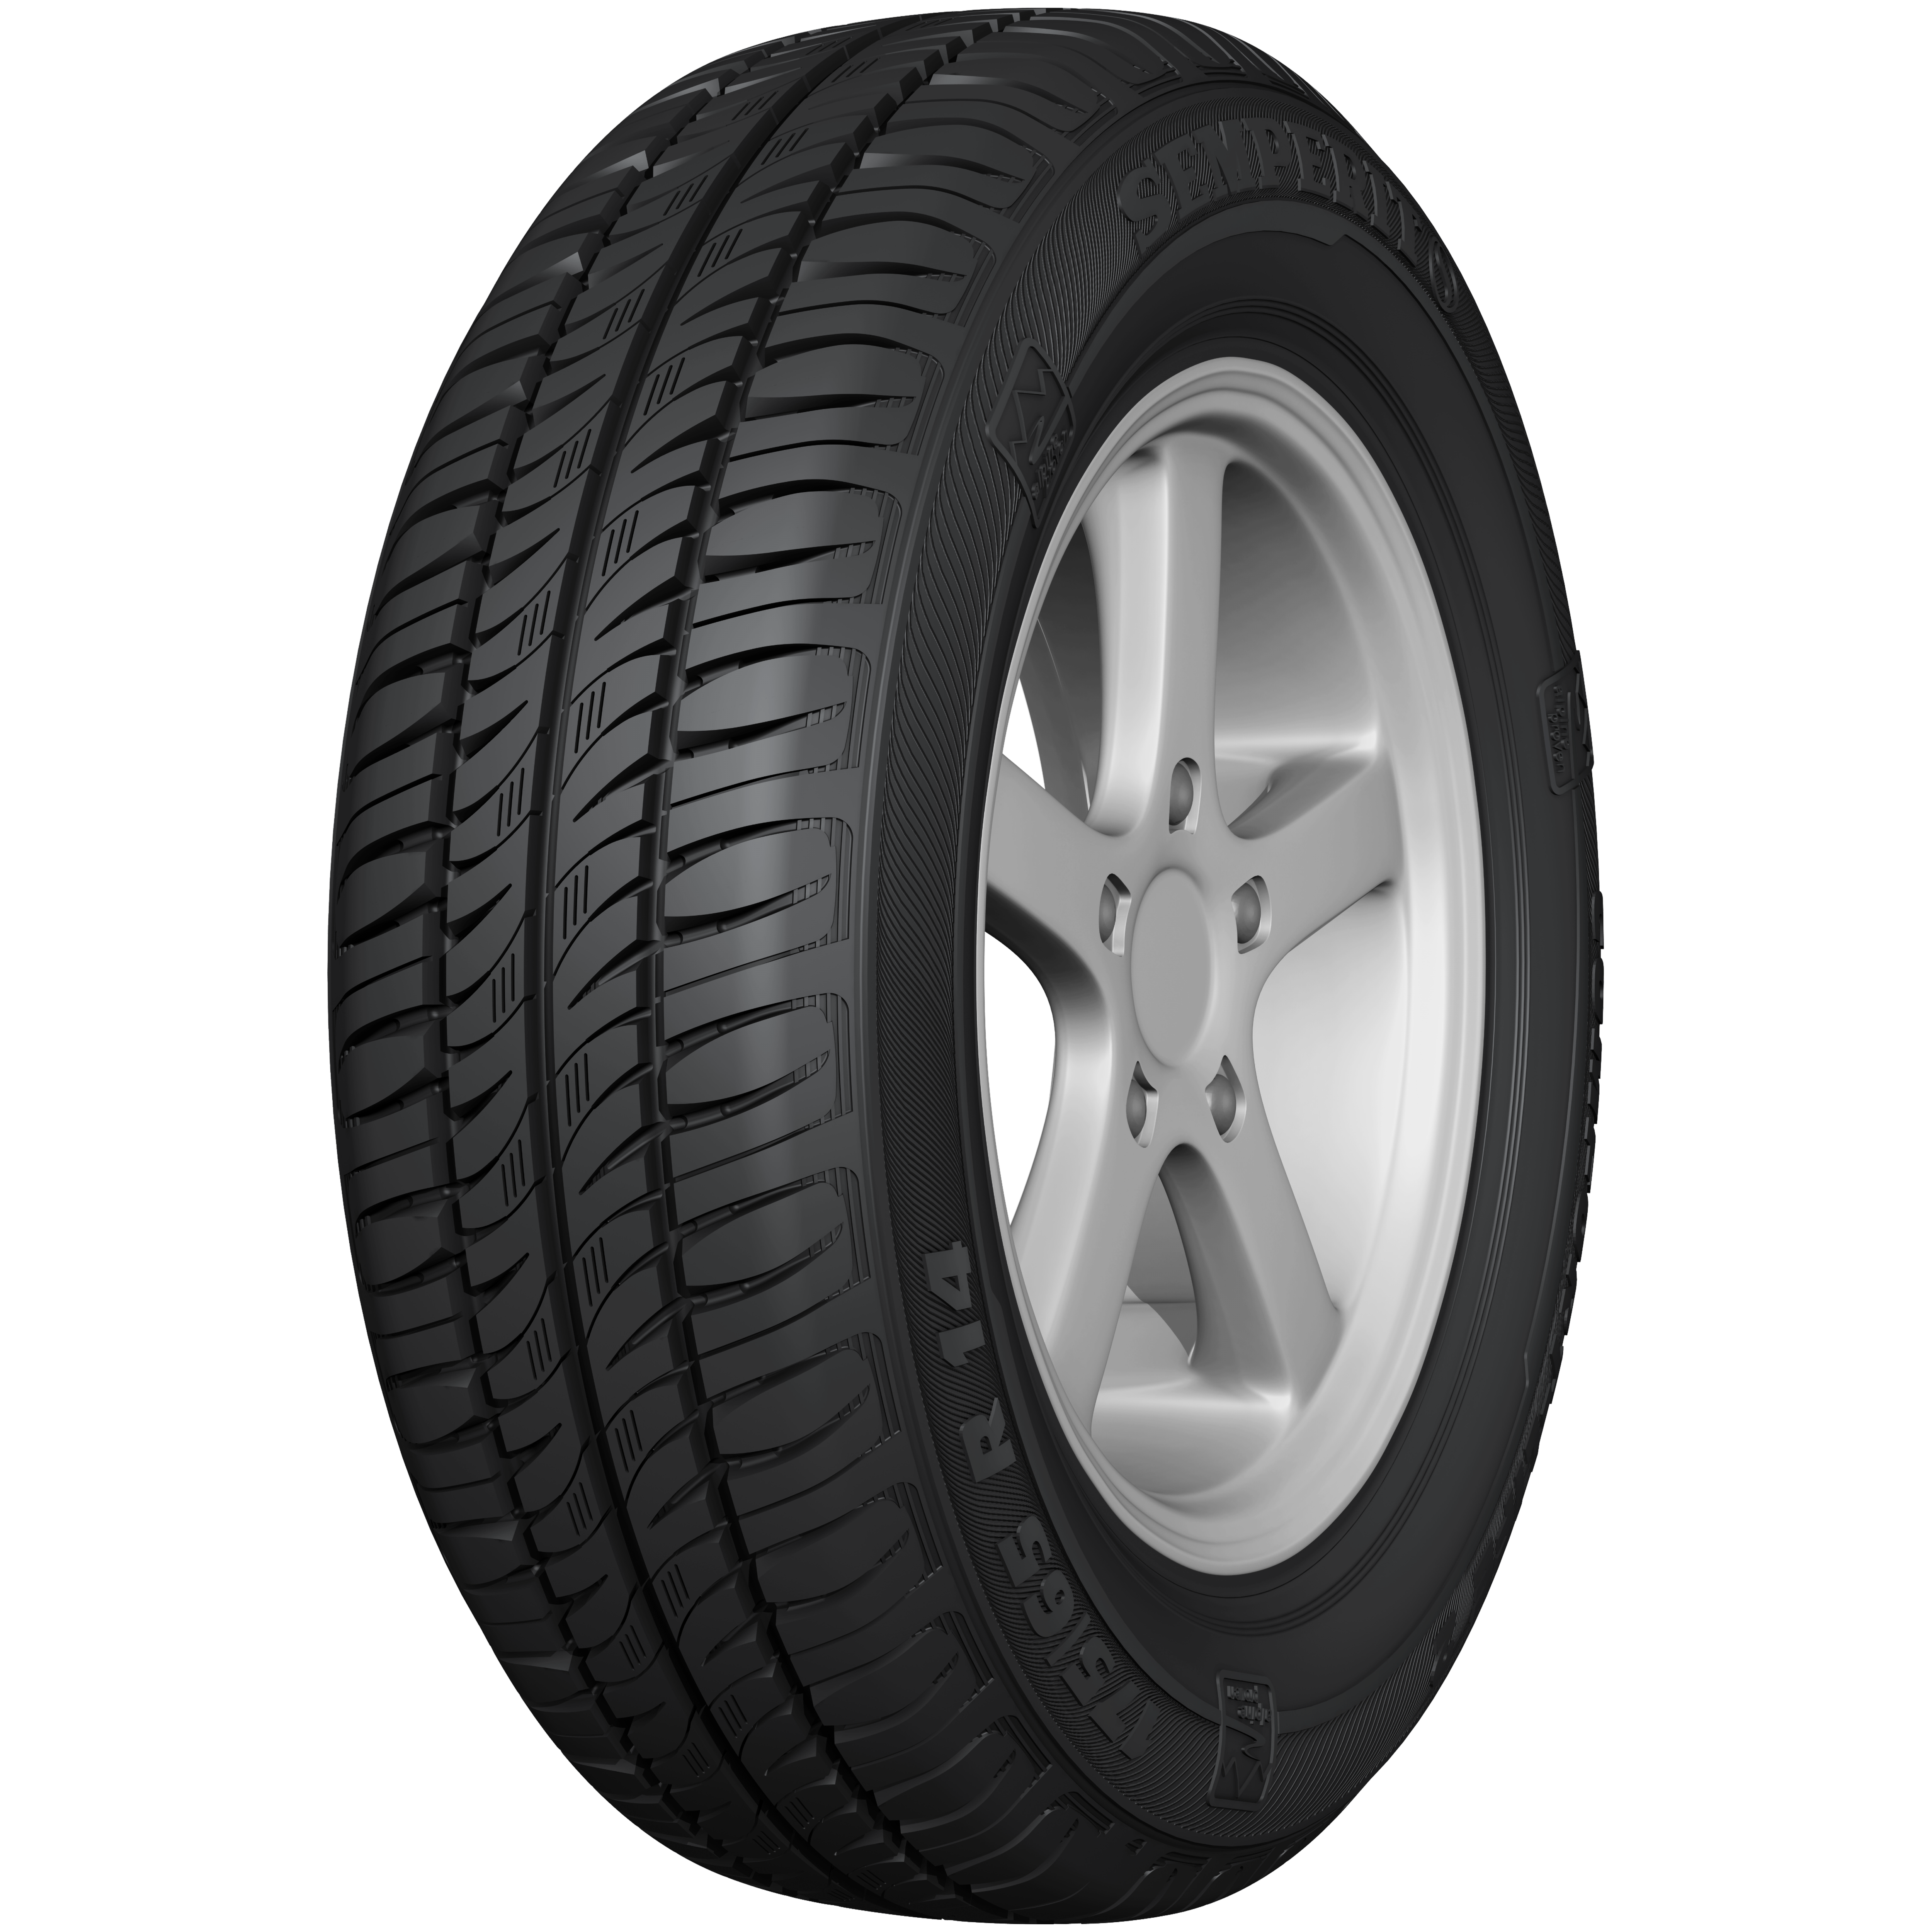 COMFORT-LIFE 2 - The tyre for compact & medium range cars & SUVs | Semperit